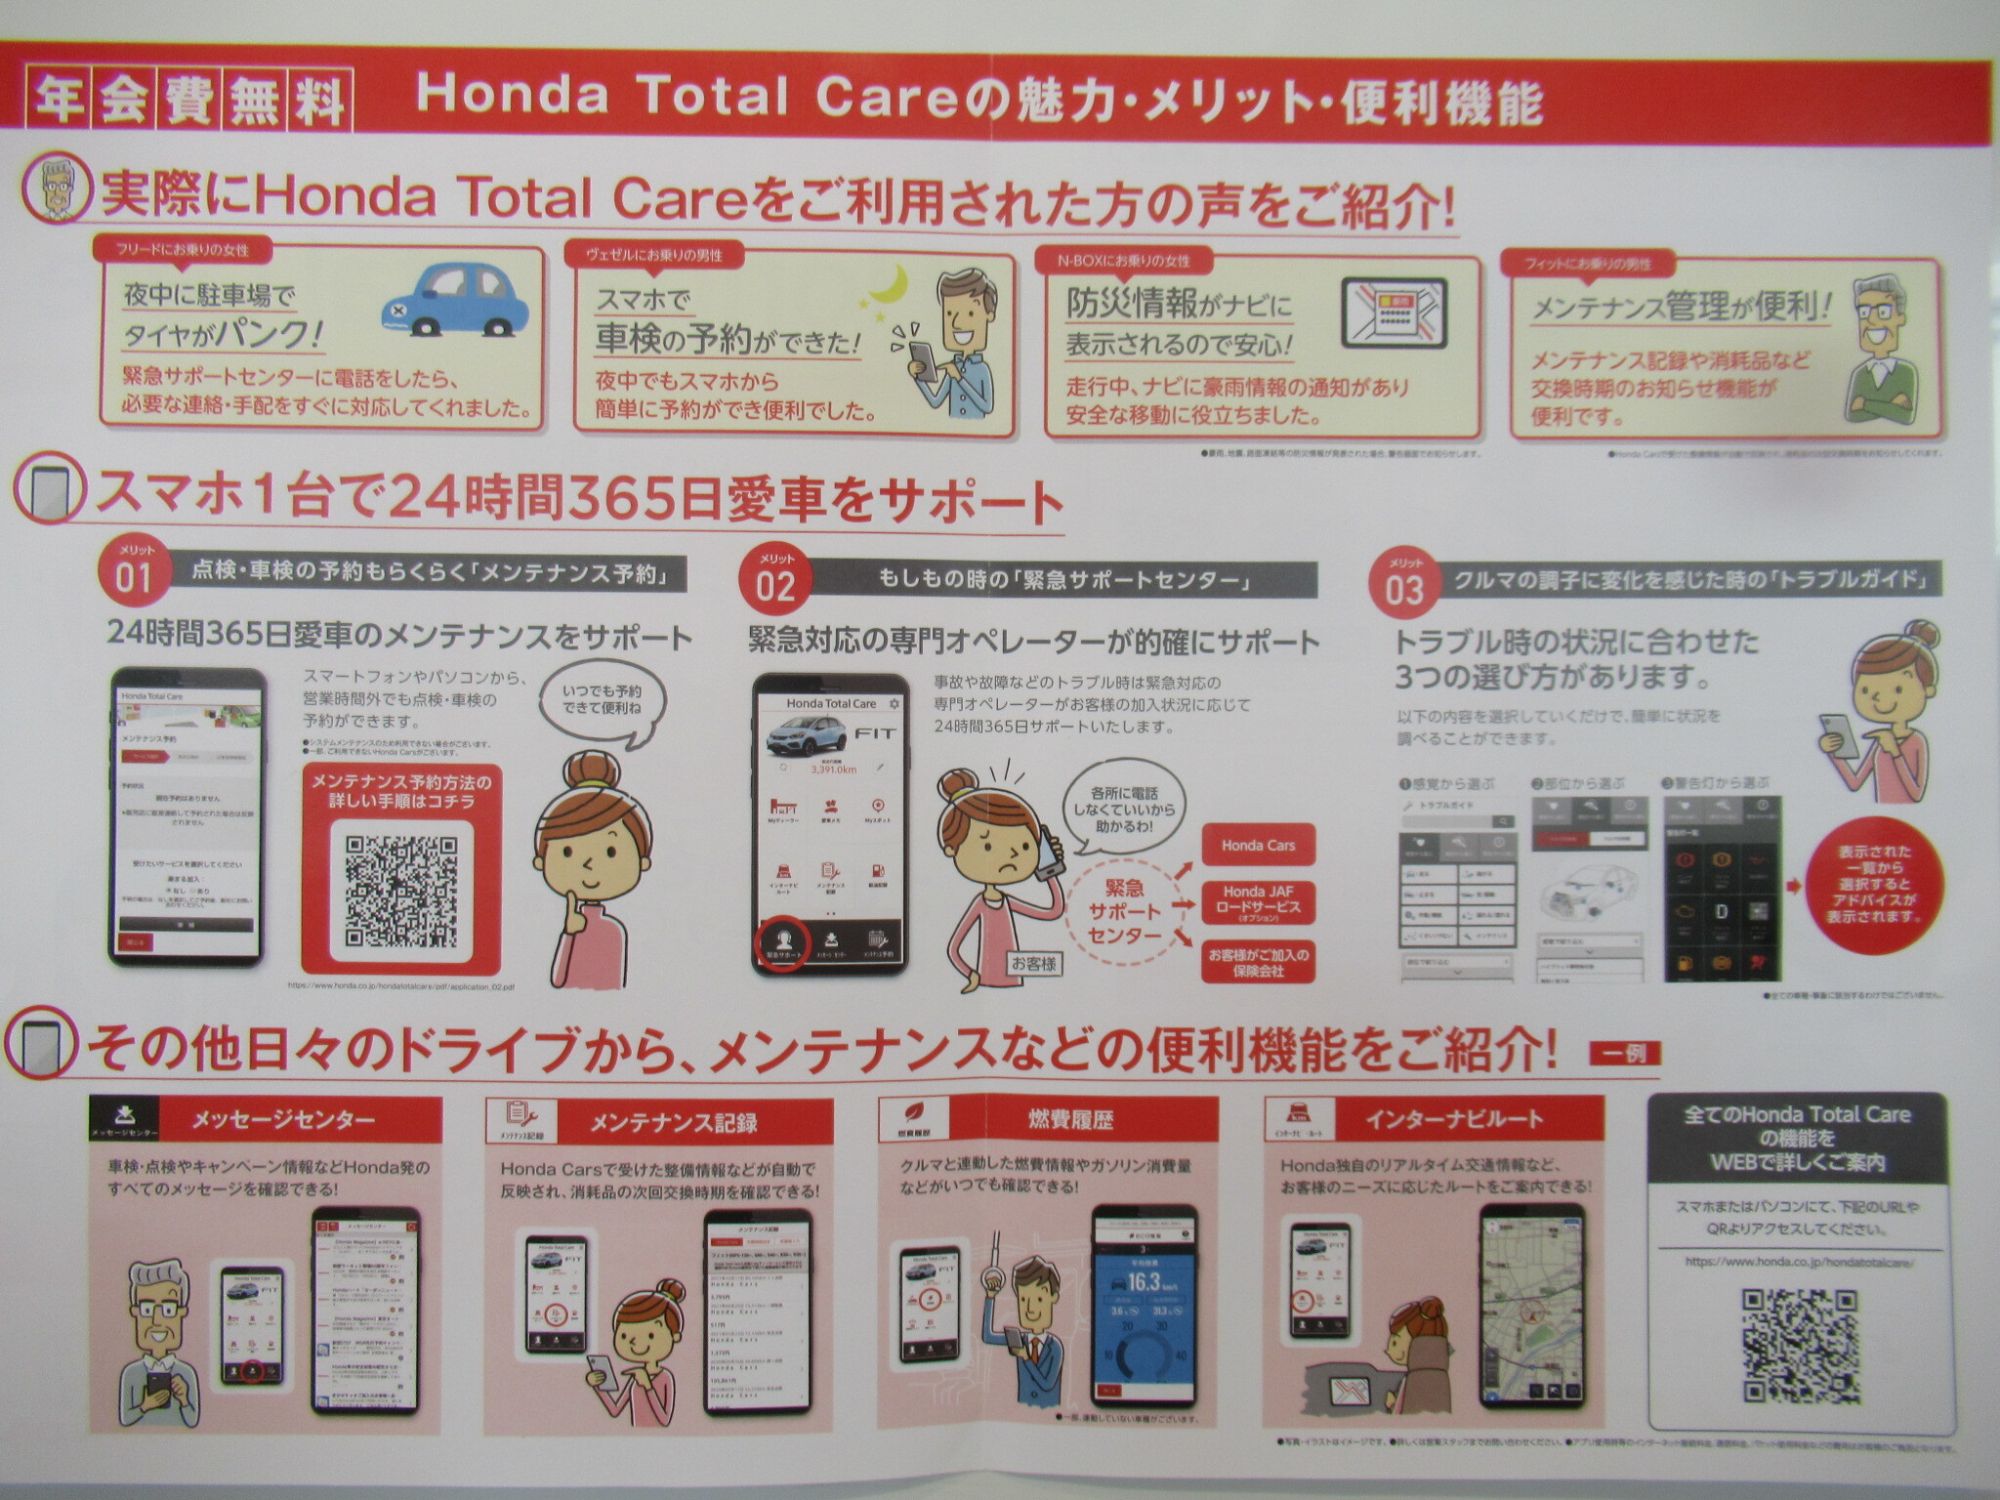 Honda Total Care 会員数500万人突破！